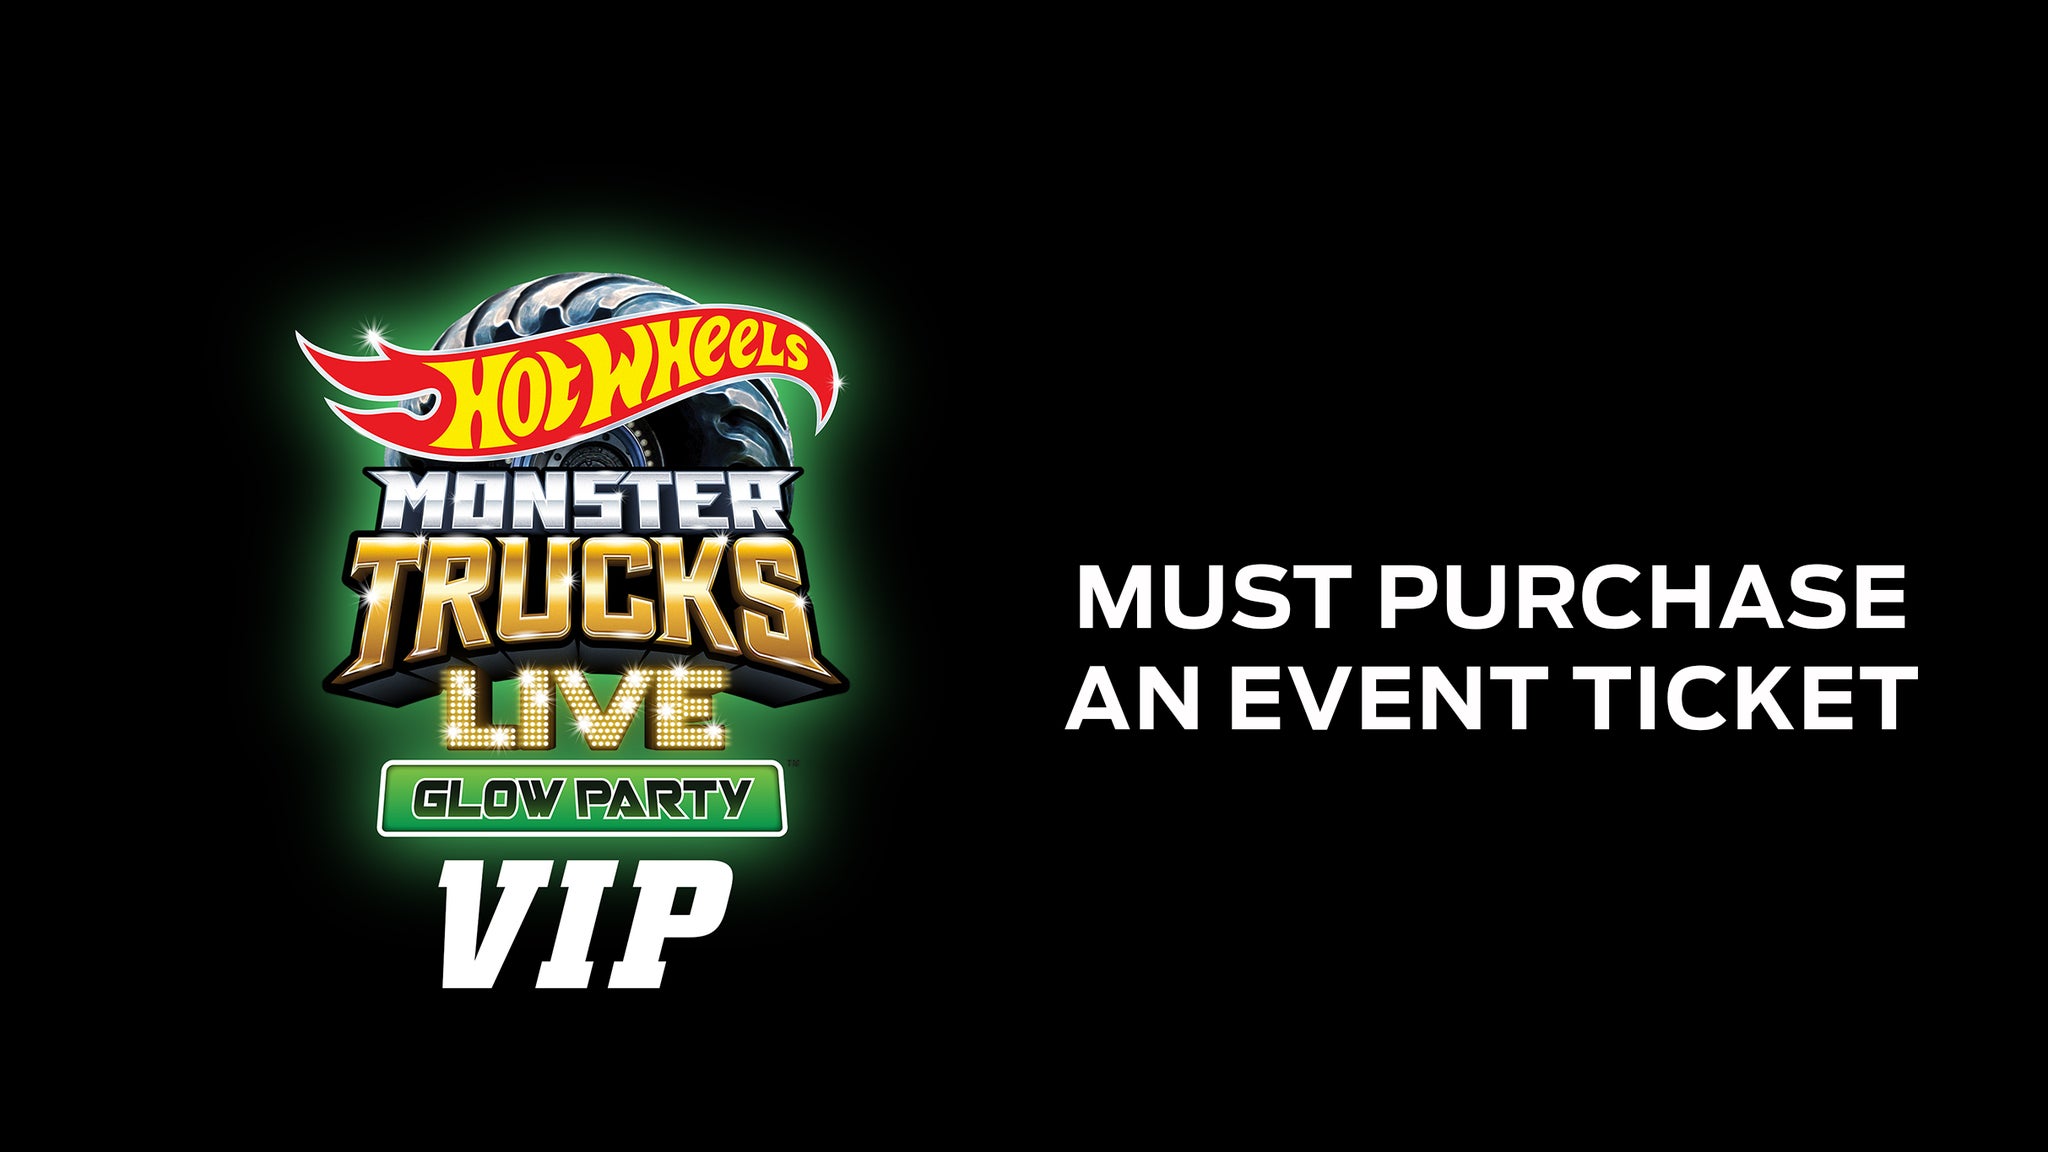 Hot Wheels VIP Backstage Experience starts at 11:30am